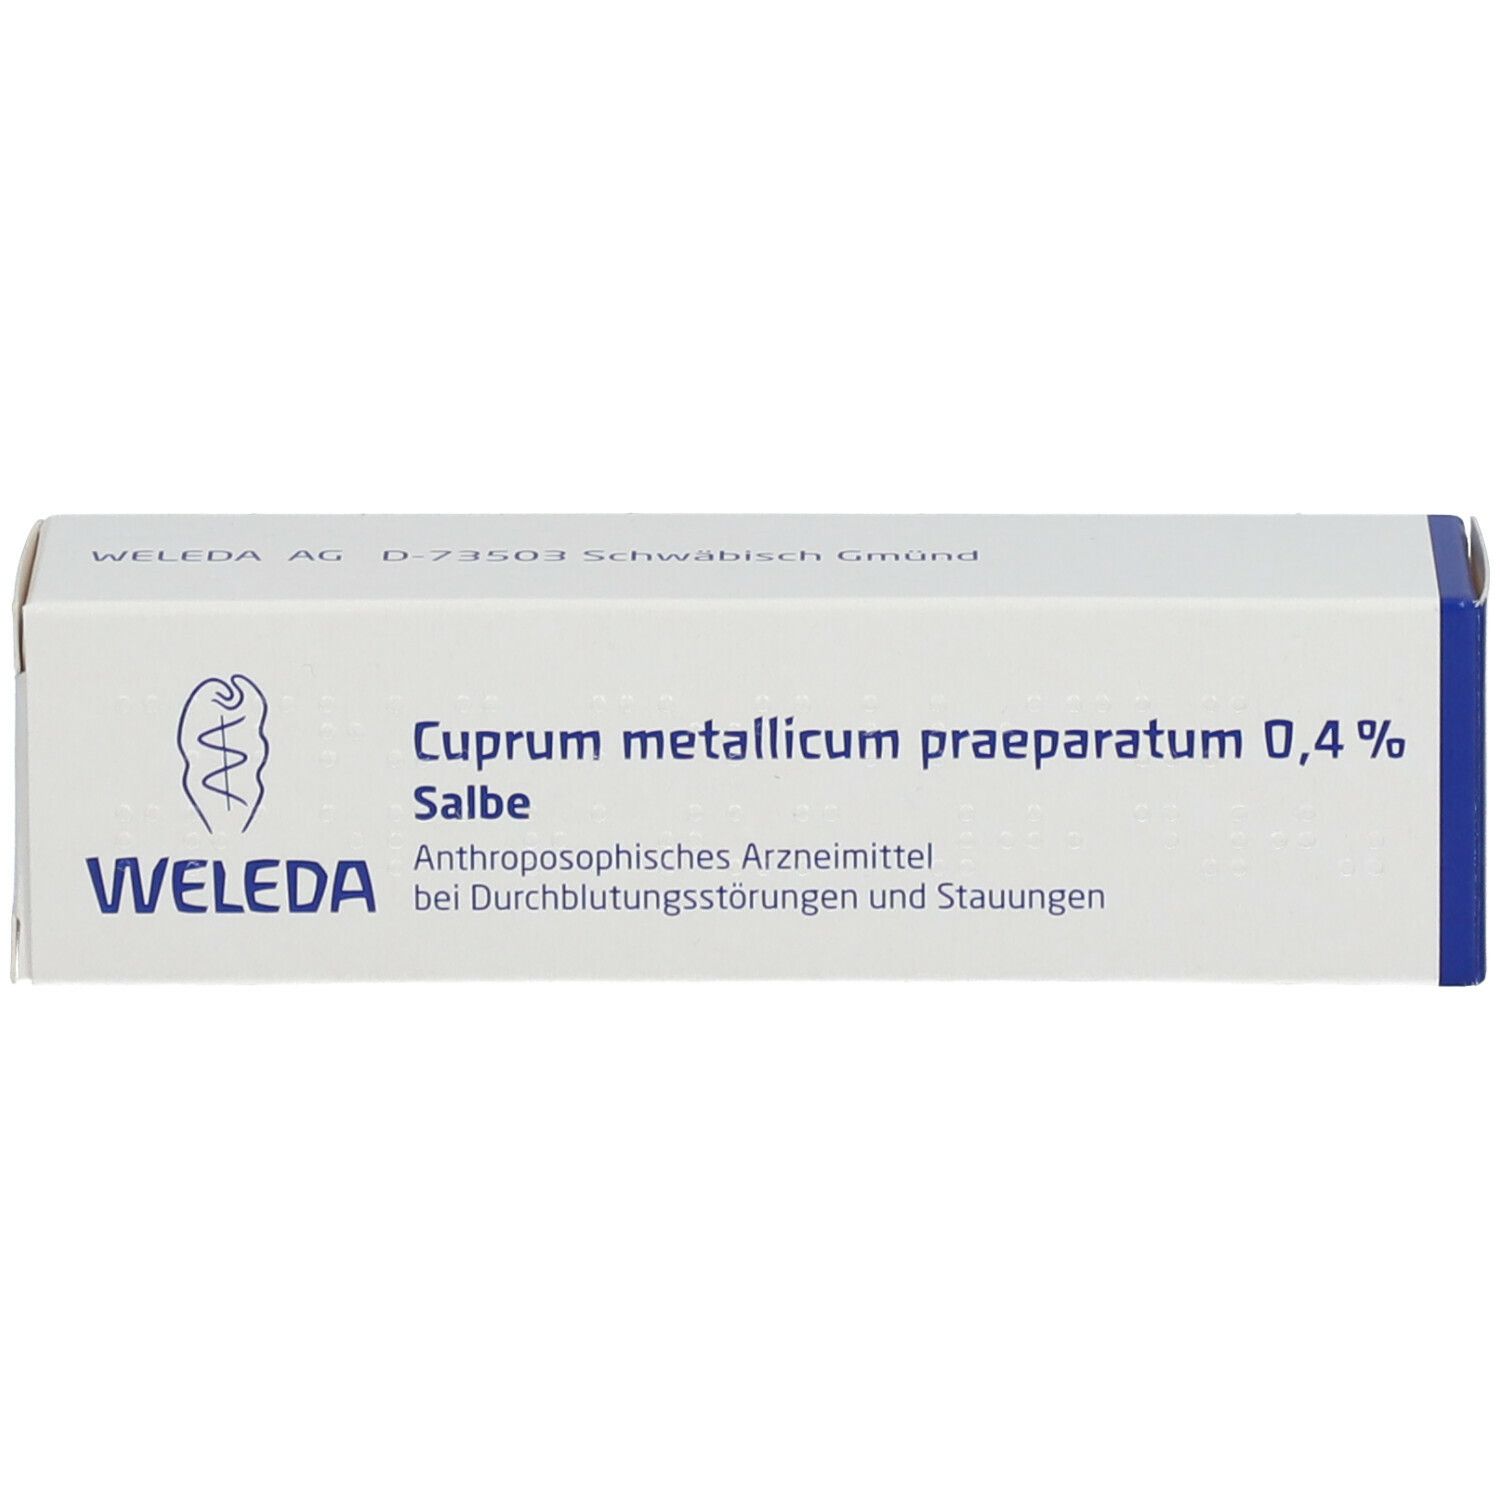 Cuprum metallicum: Wirkung & Anwendung